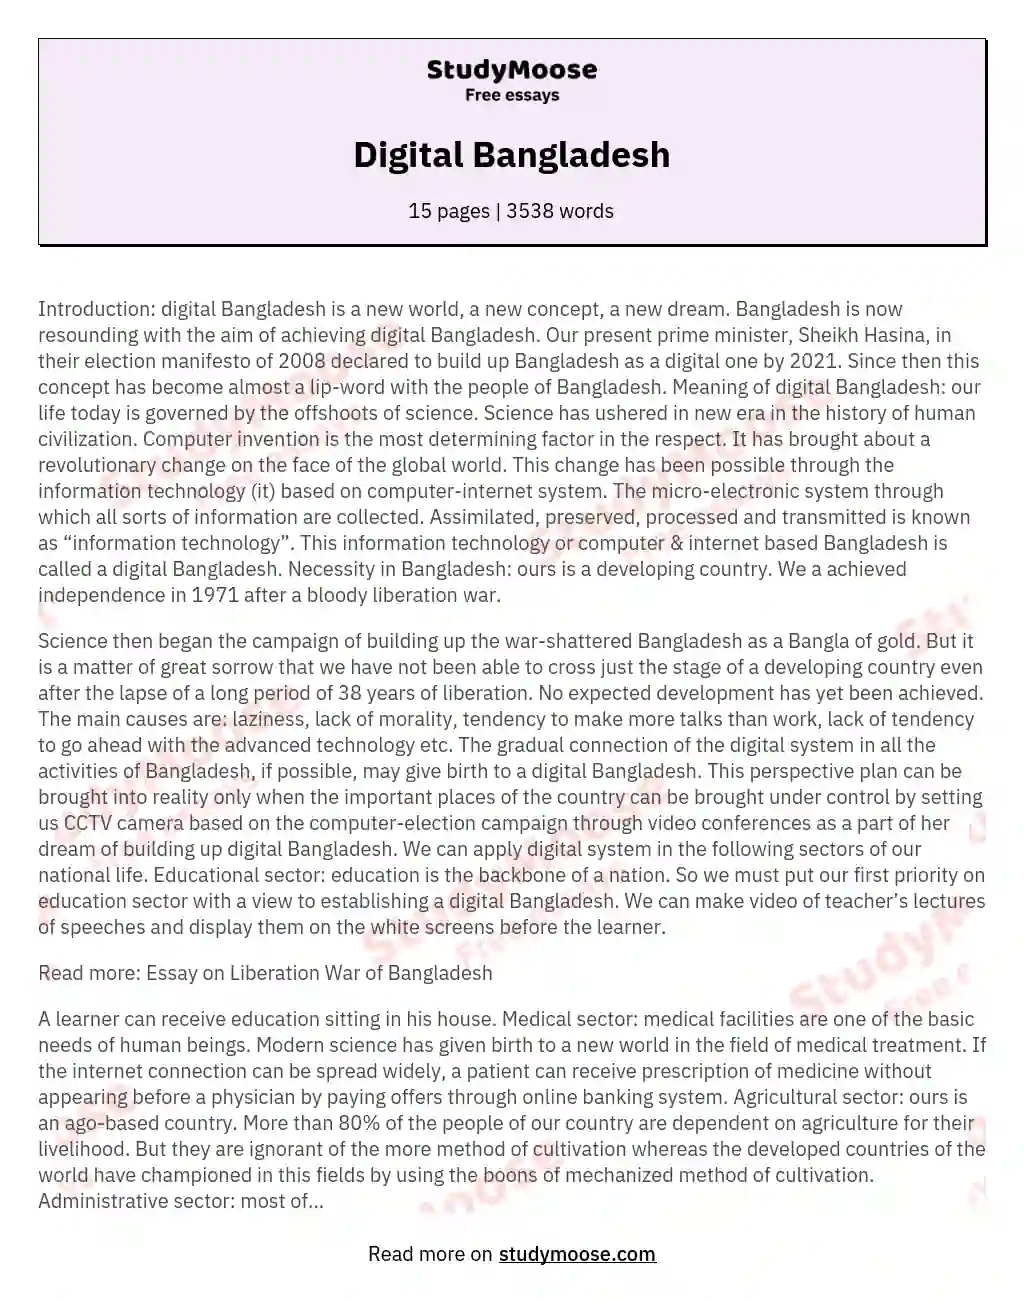 Digital Bangladesh essay